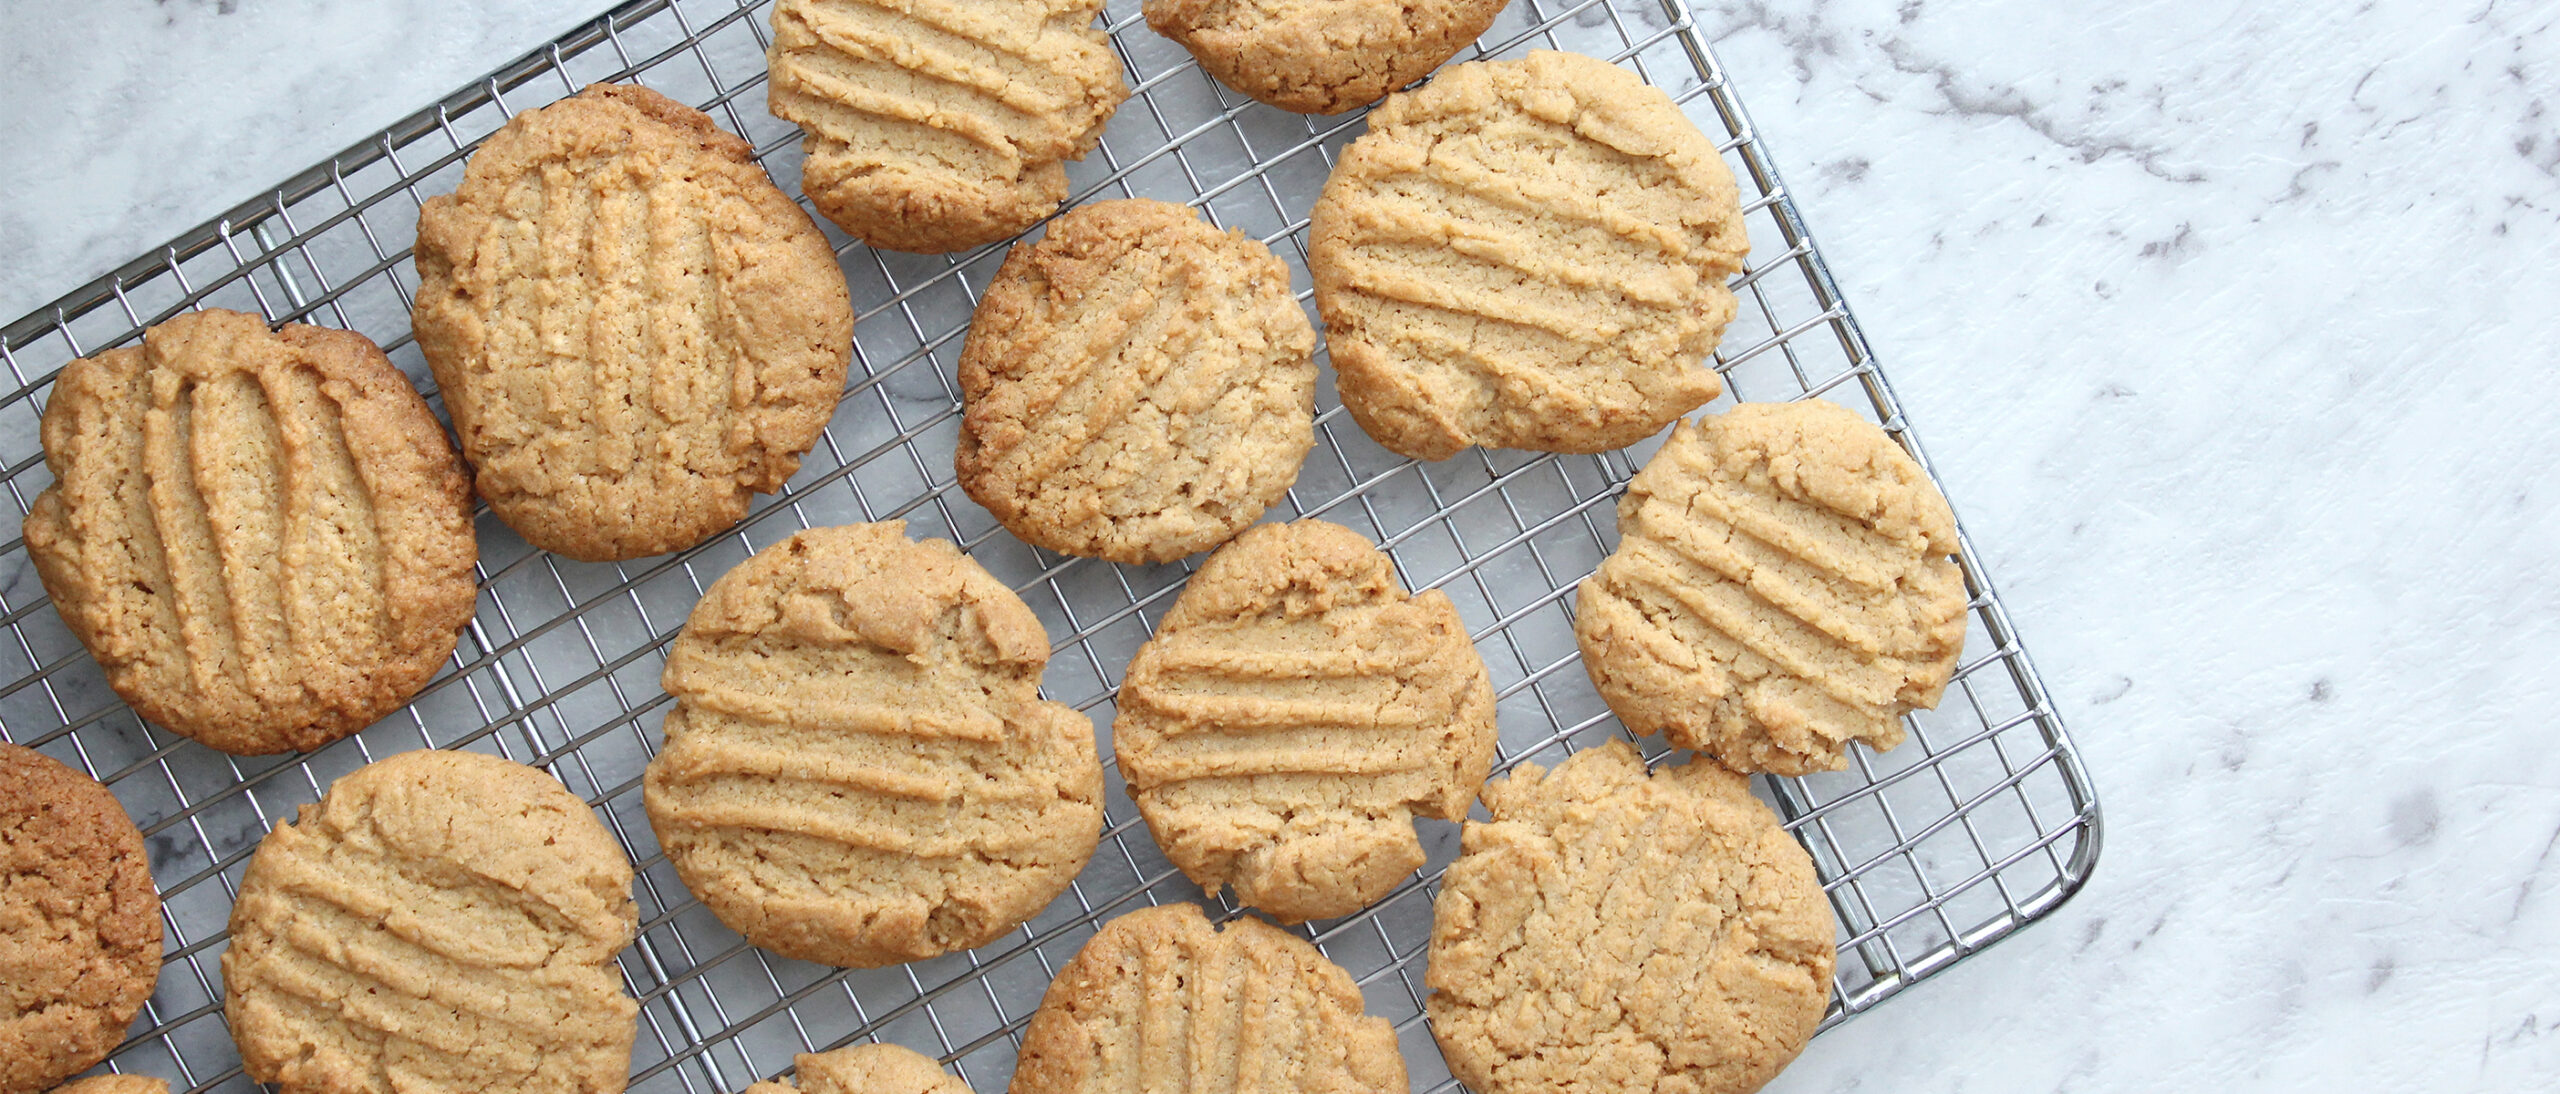 How To Make Kraft Peanut Butter Cookies